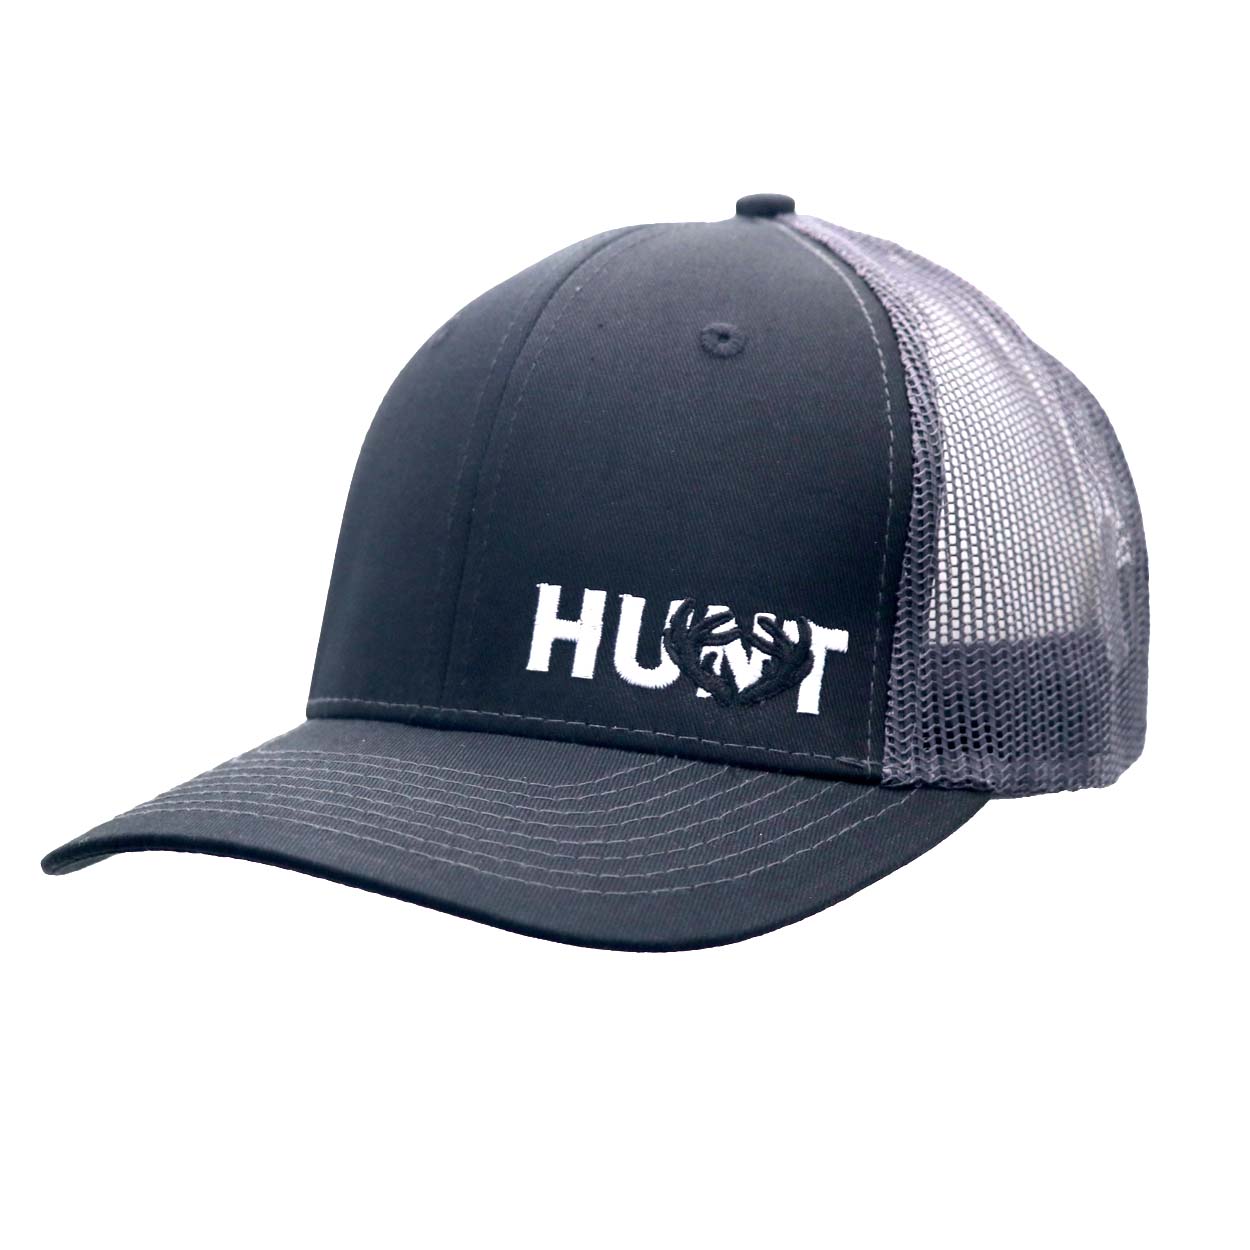 Hunt Rack Logo Night Out Embroidered Snapback Trucker Hat Black/Dark Gray